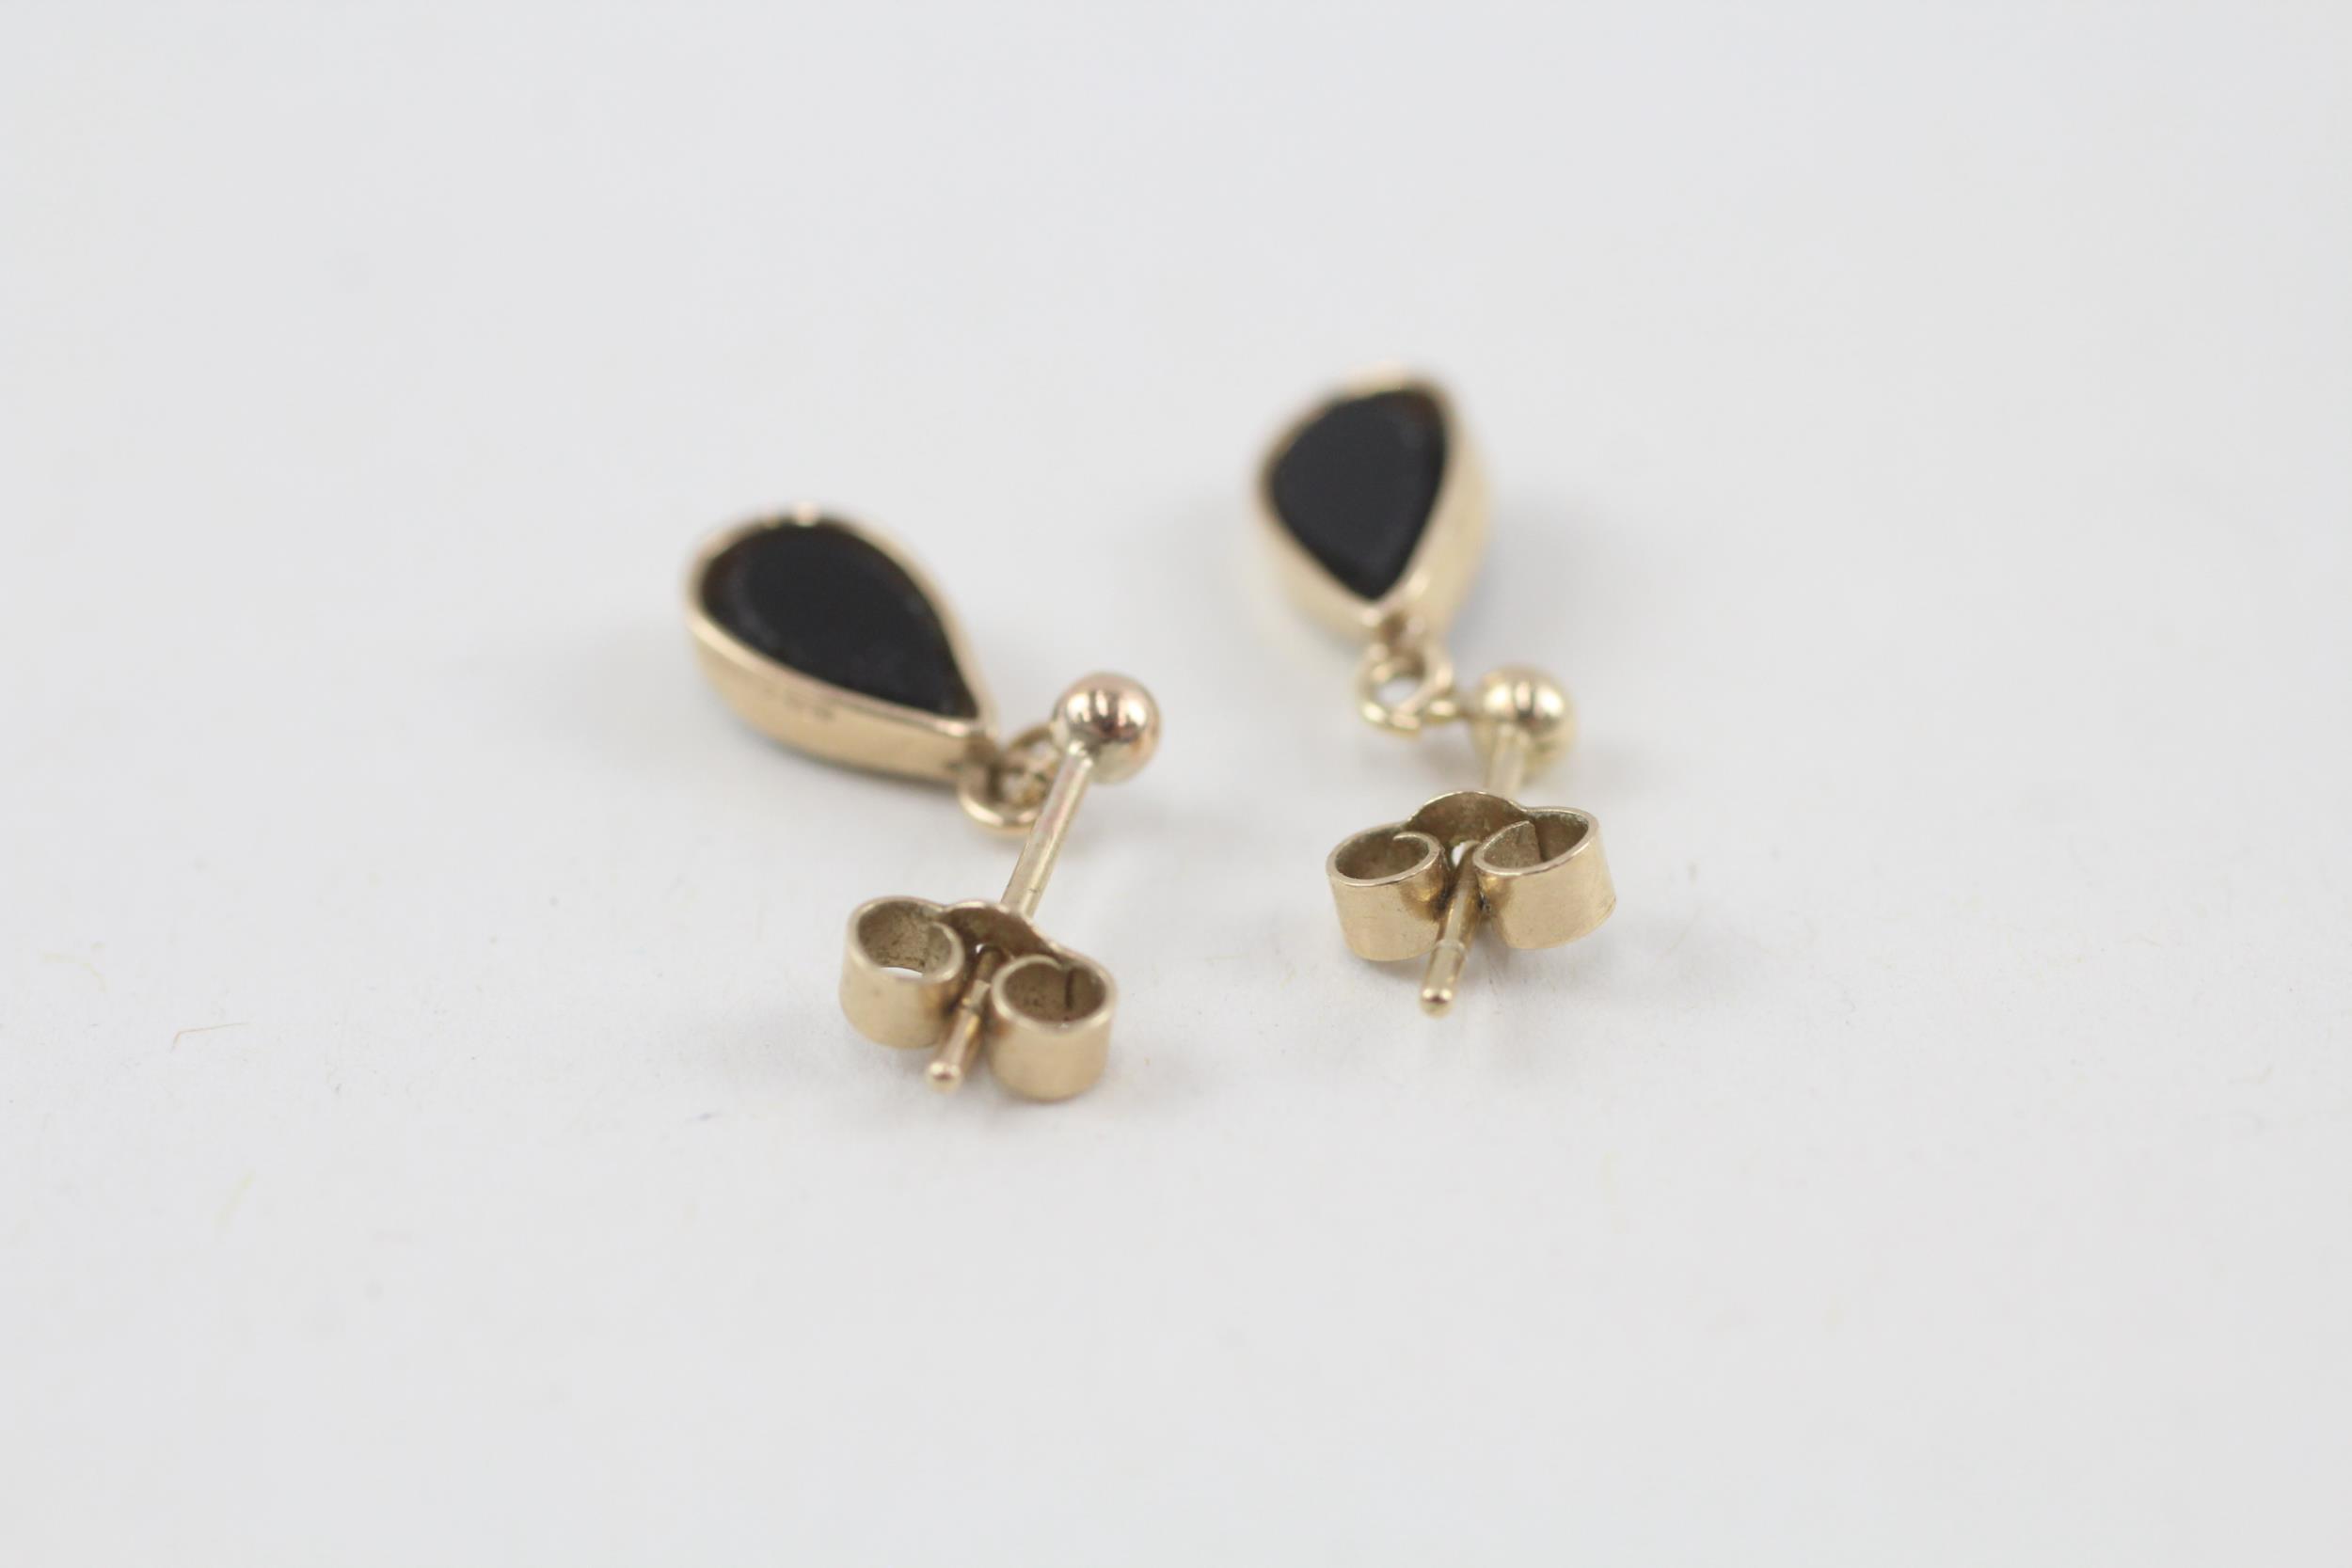 9ct gold vintage opal triplet drop earrings with scroll backs (0.8g) - Image 6 of 6